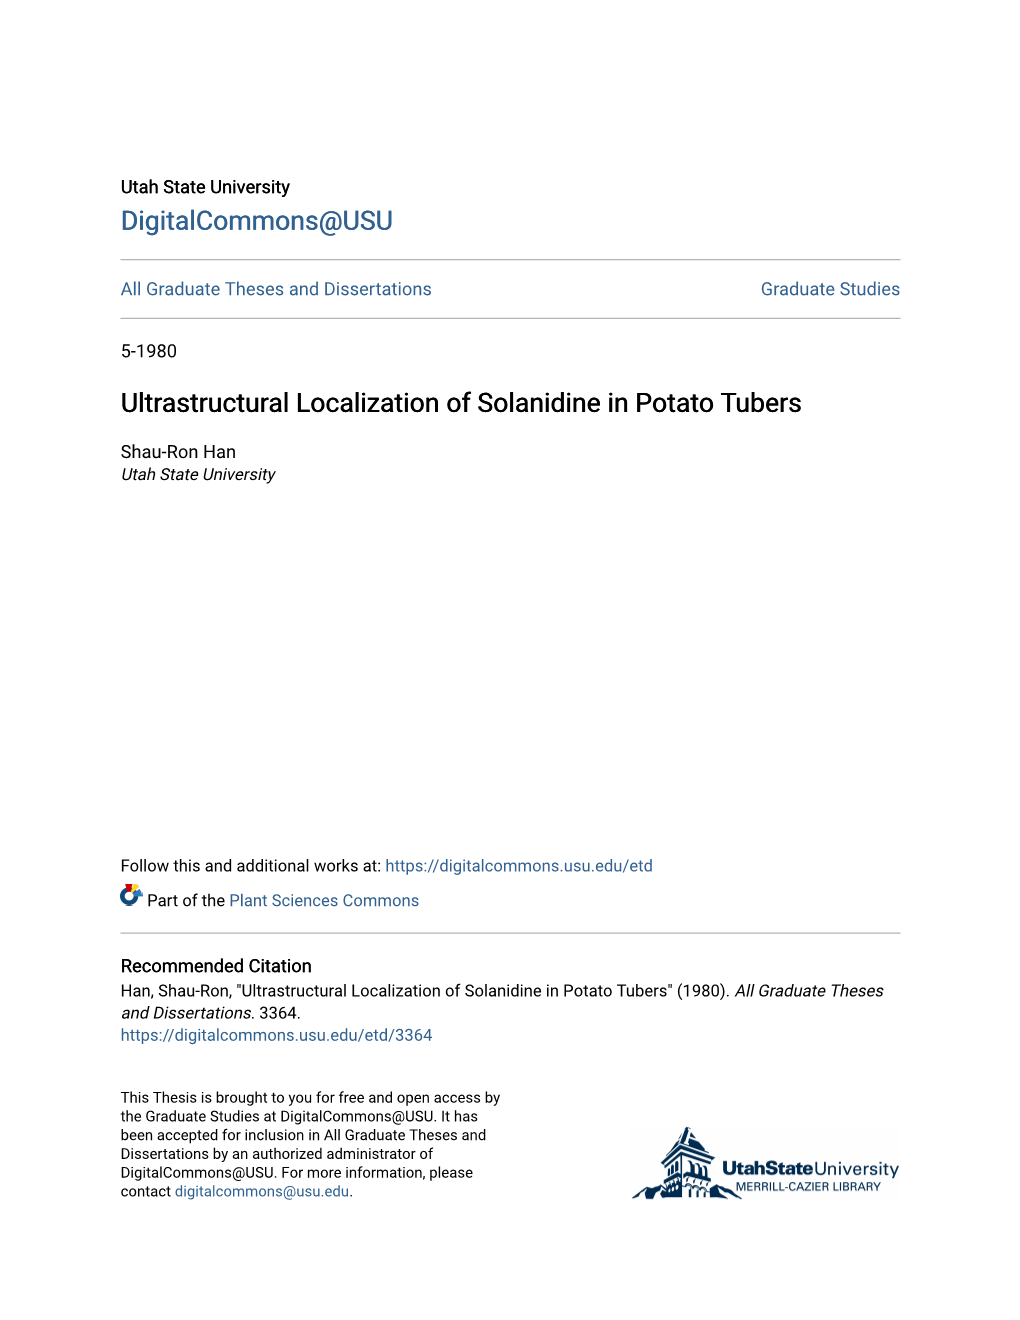 Ultrastructural Localization of Solanidine in Potato Tubers